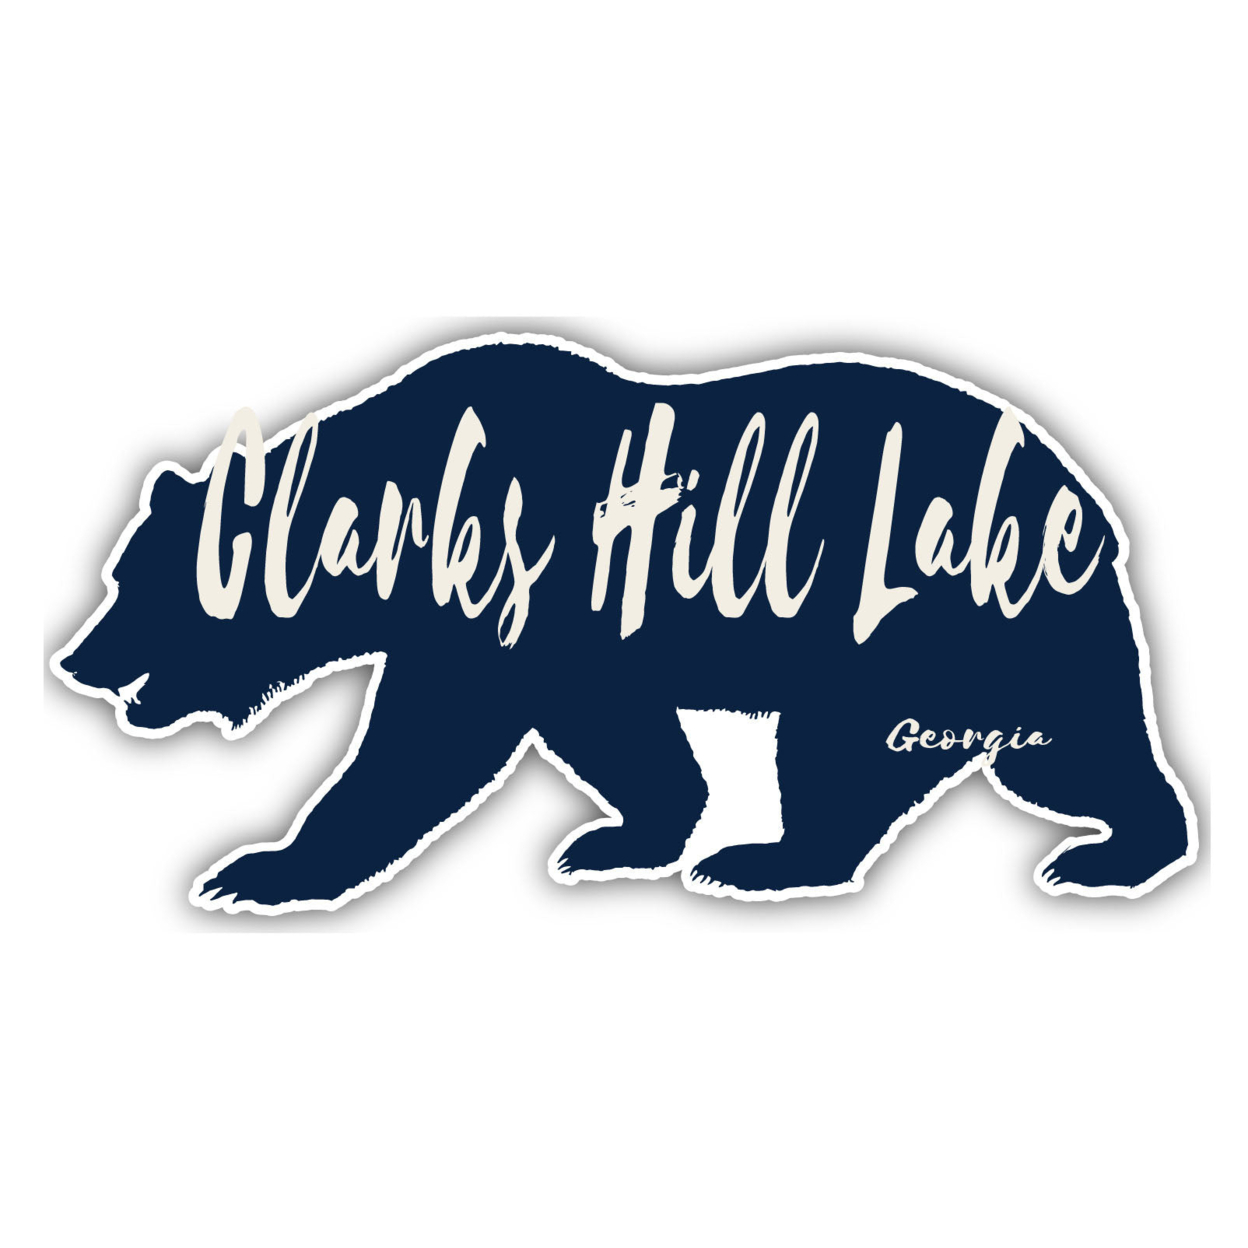 Clarks Hill Lake Georgia Souvenir Decorative Stickers (Choose Theme And Size) - Single Unit, 6-Inch, Bear